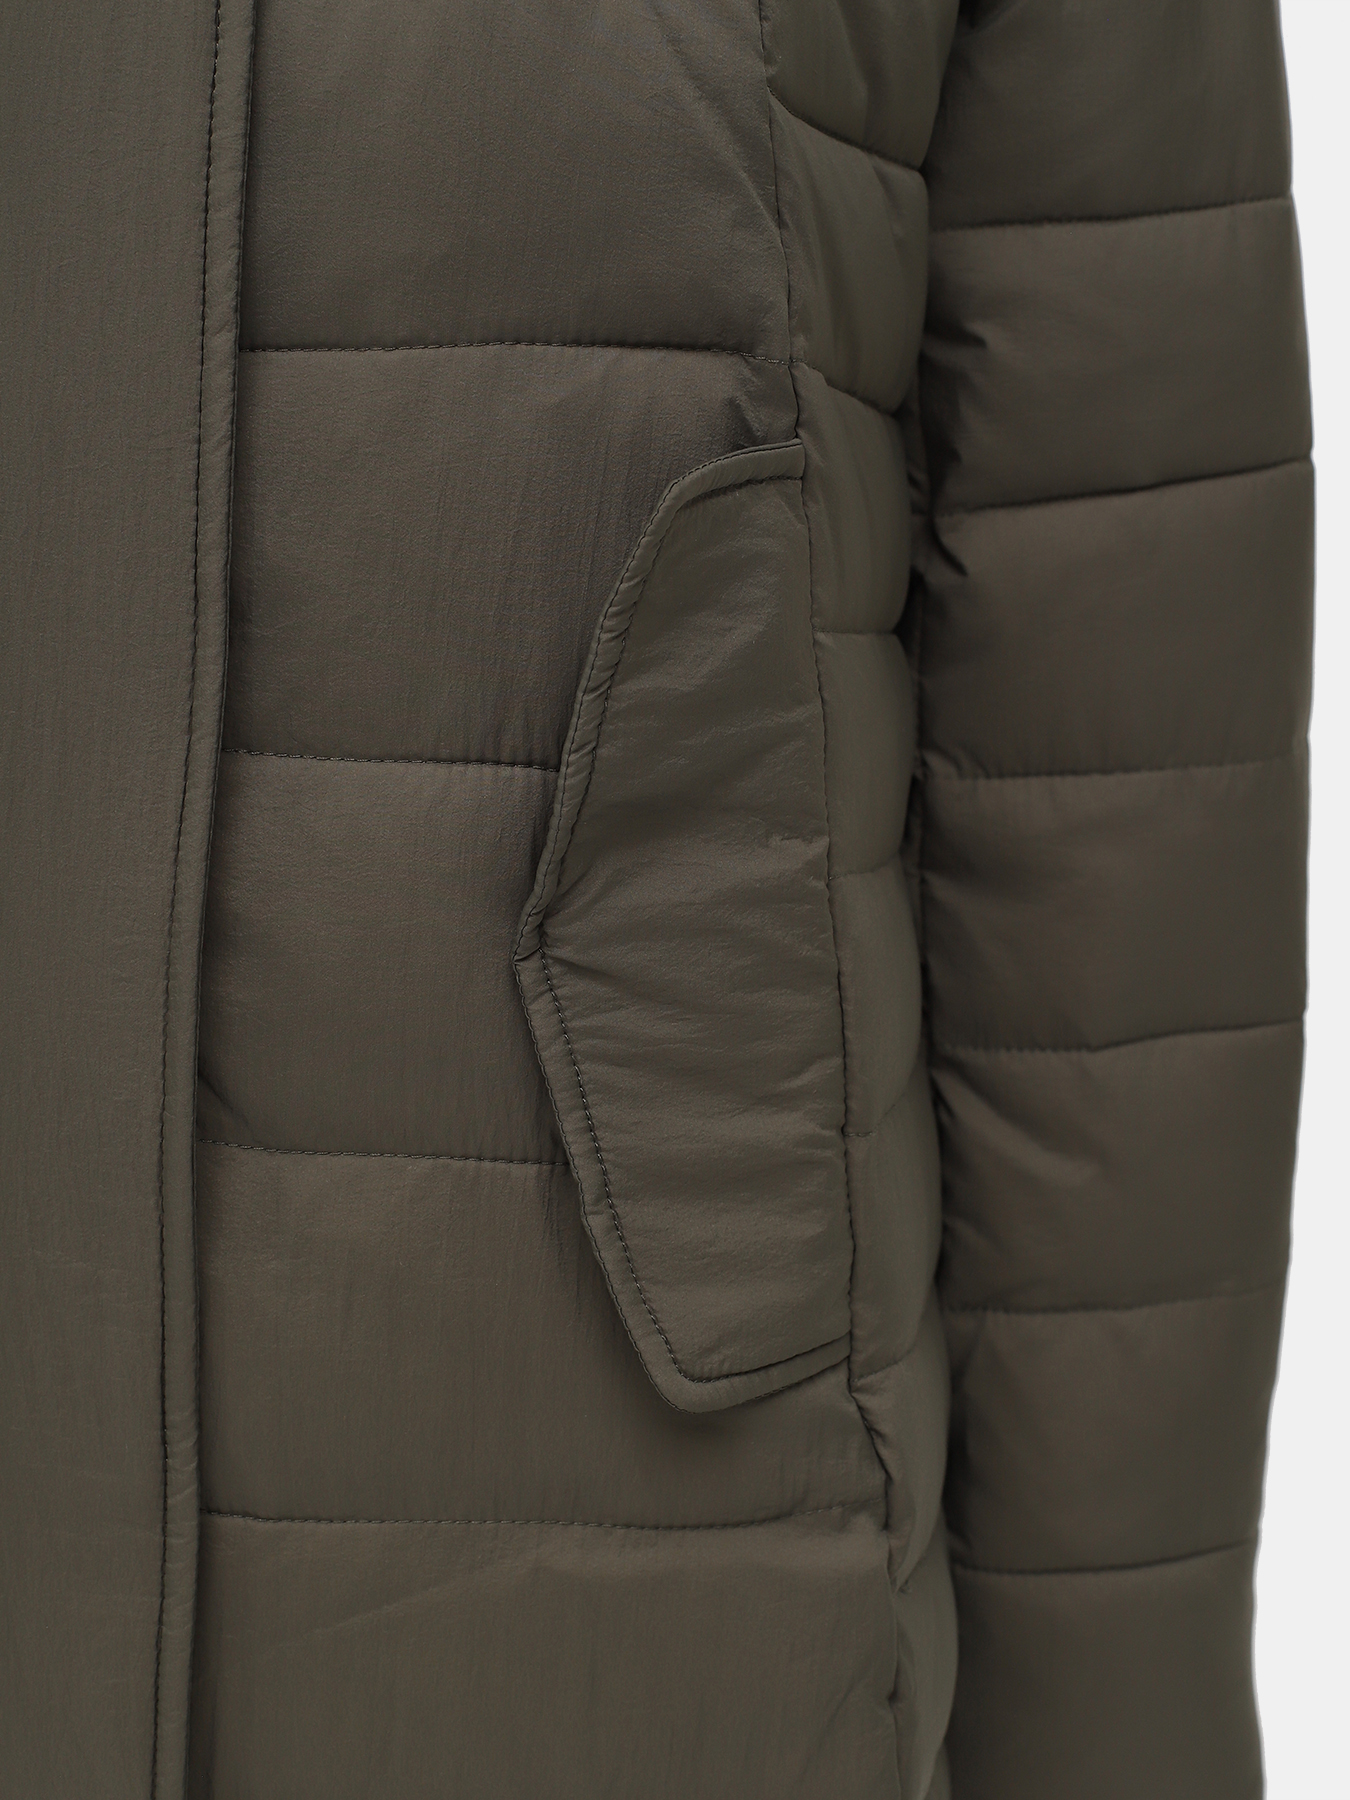 Пальто зимнее Alessandro Manzoni Purpur 384502-191, цвет хаки, размер 48-50 - фото 4